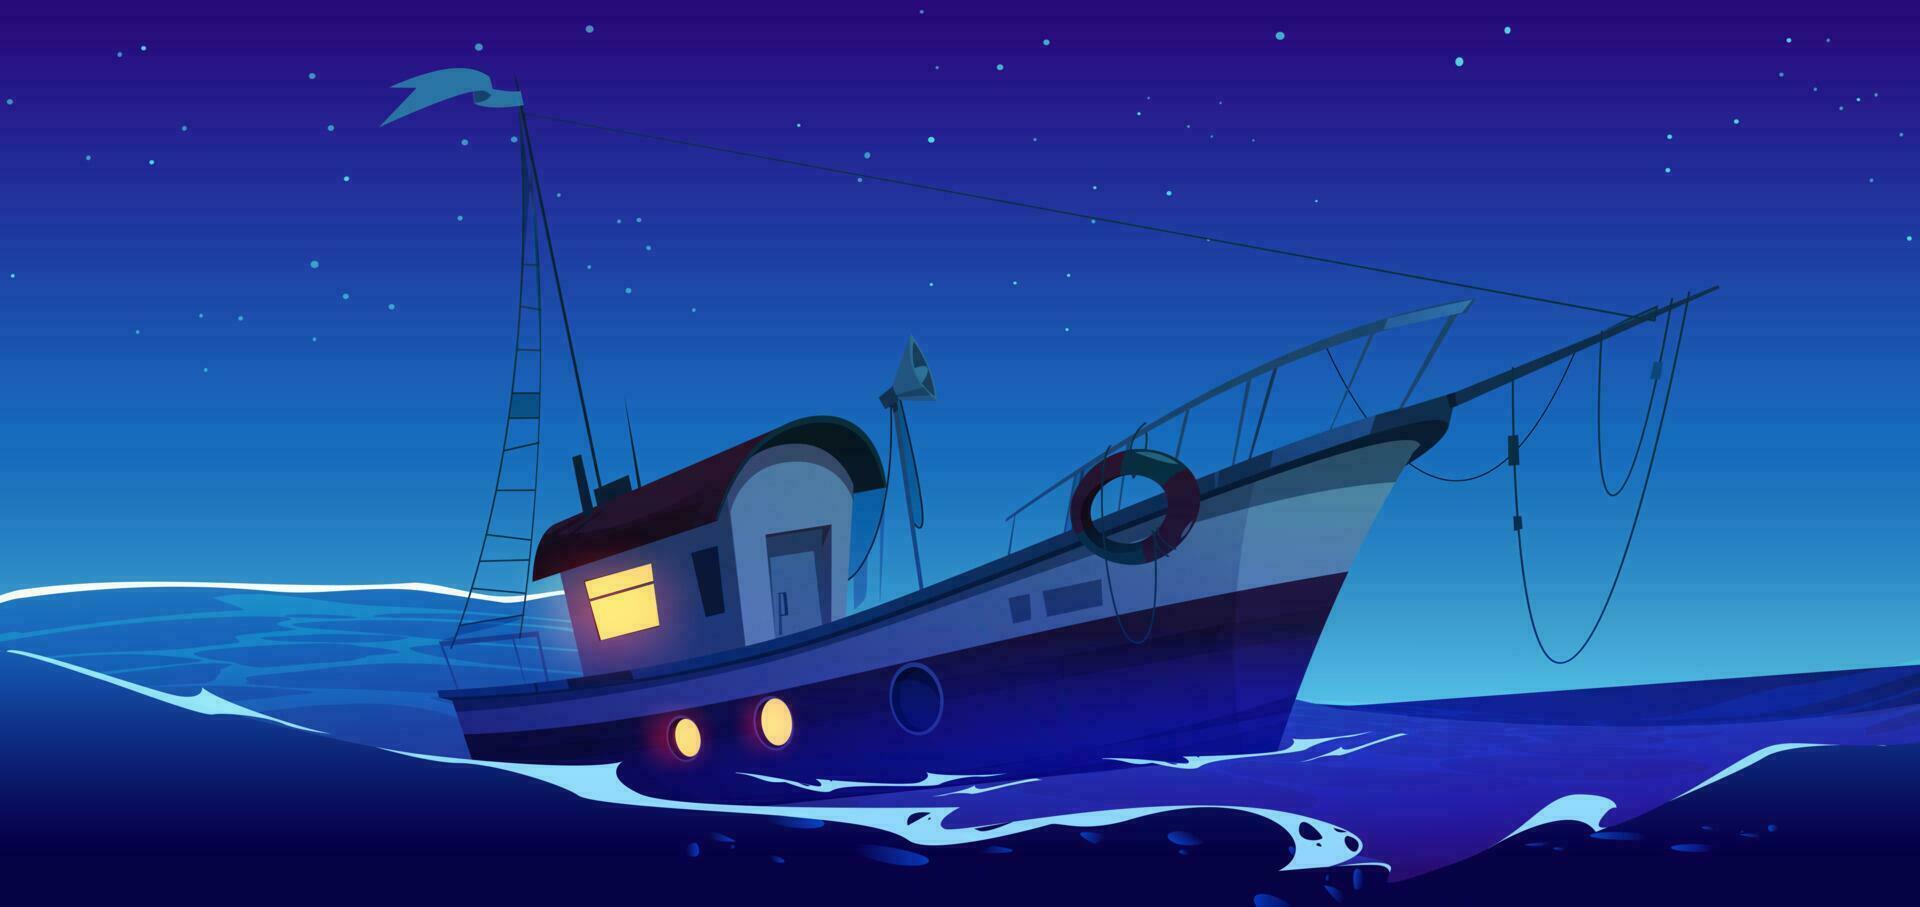 Fishing boat in sea or ocean at night vector